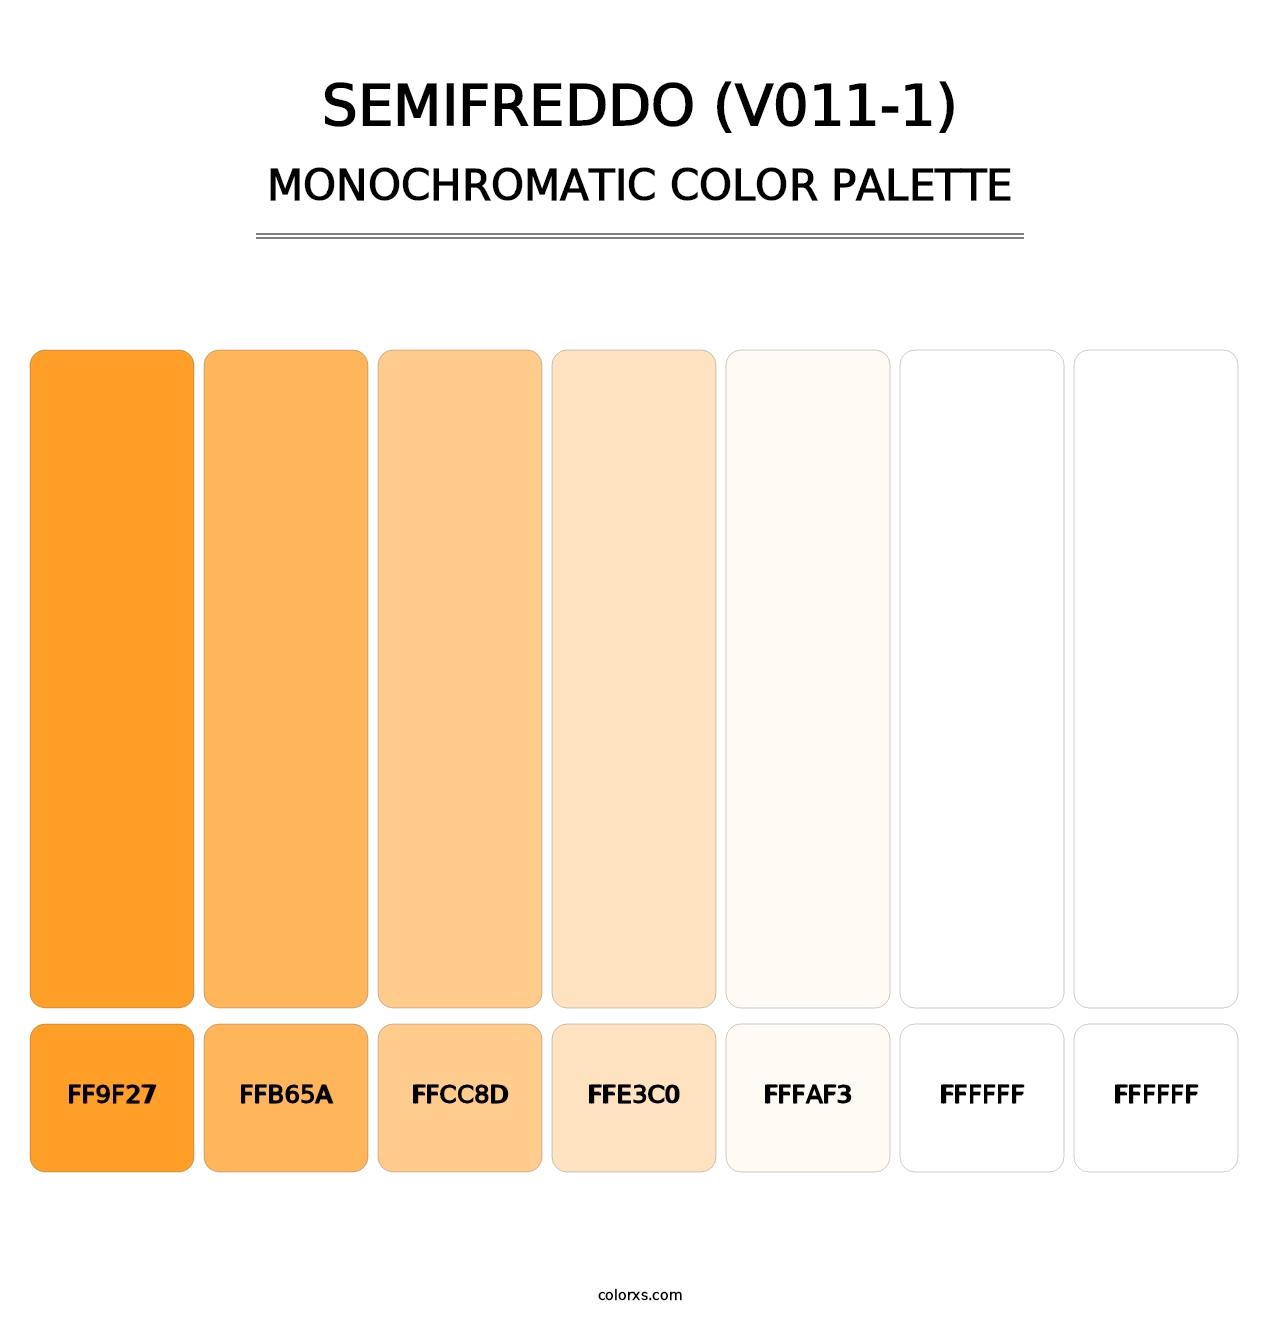 Semifreddo (V011-1) - Monochromatic Color Palette